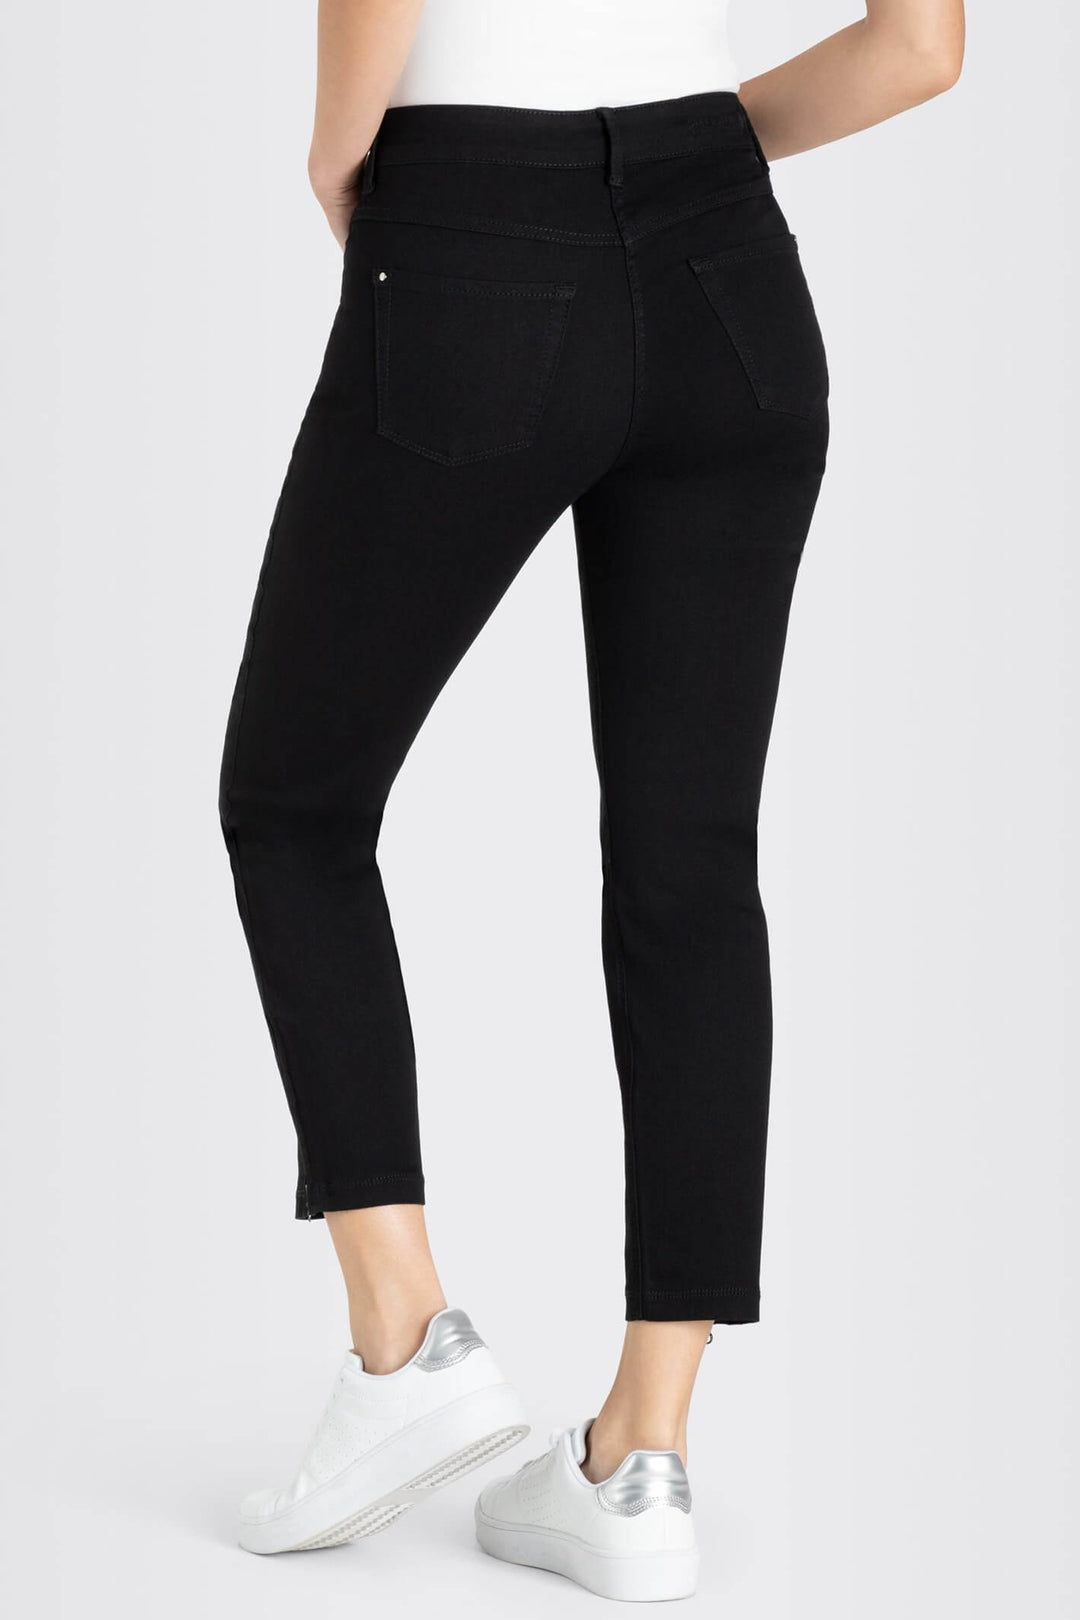 Mac Jeans 5471-91-0355L D999 Black Dream Chic - Olivia Grace Fashion